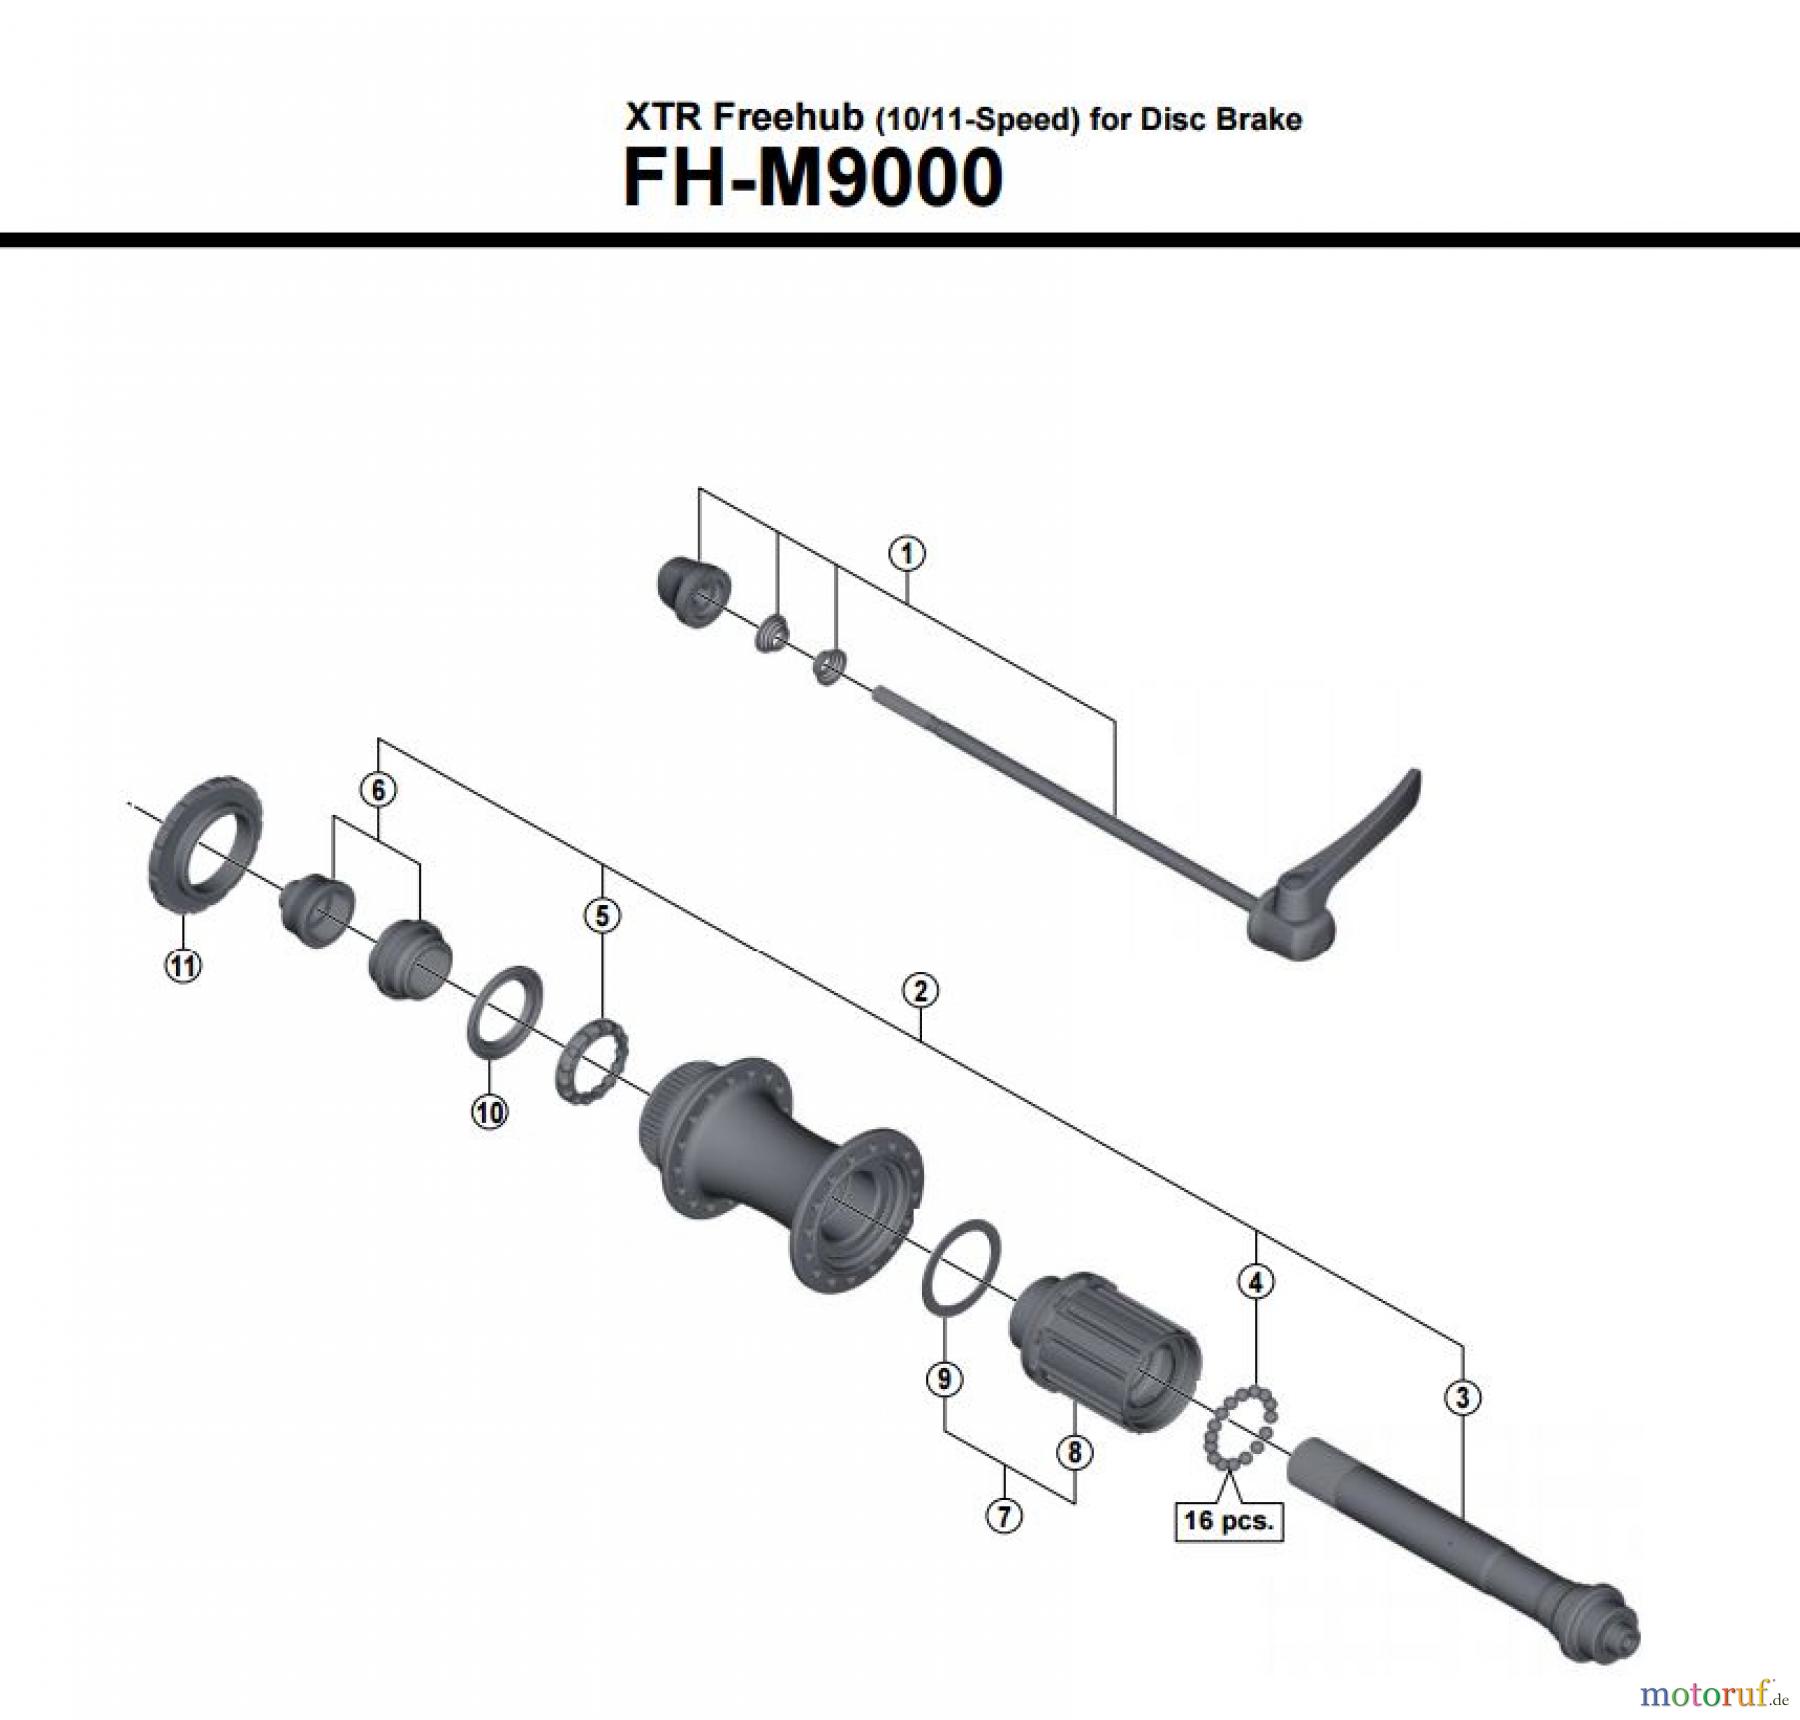  Shimano FH Free Hub - Freilaufnabe FH-M9000 XTR Freehub (10/11-Speed) for Disc Brake